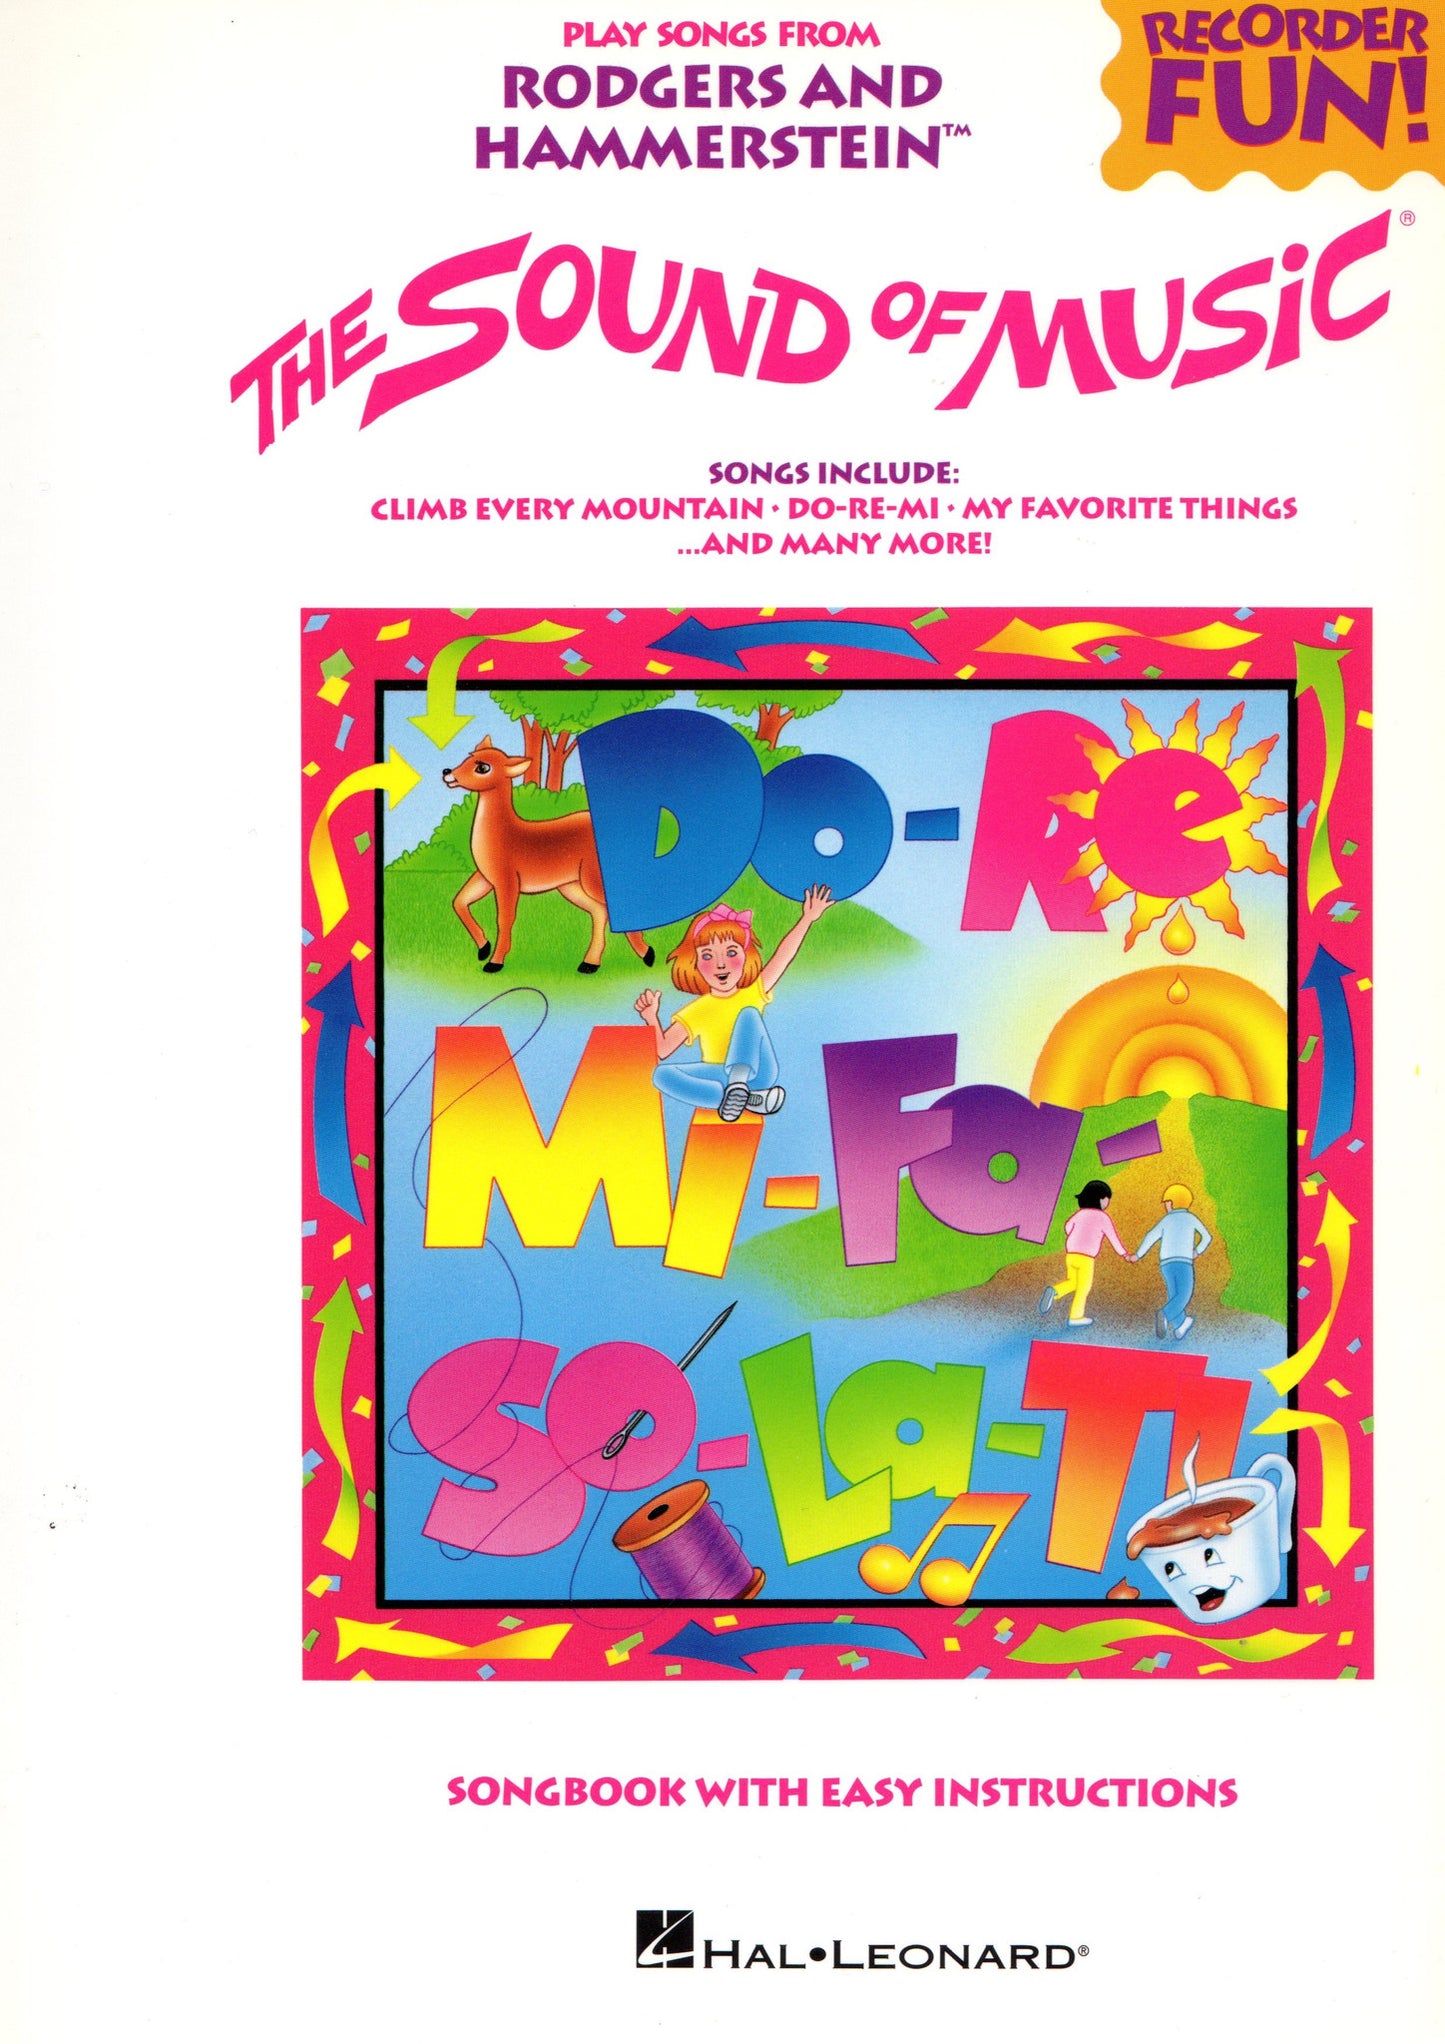 The Sound Of Music - Recorder Fun! - Canada